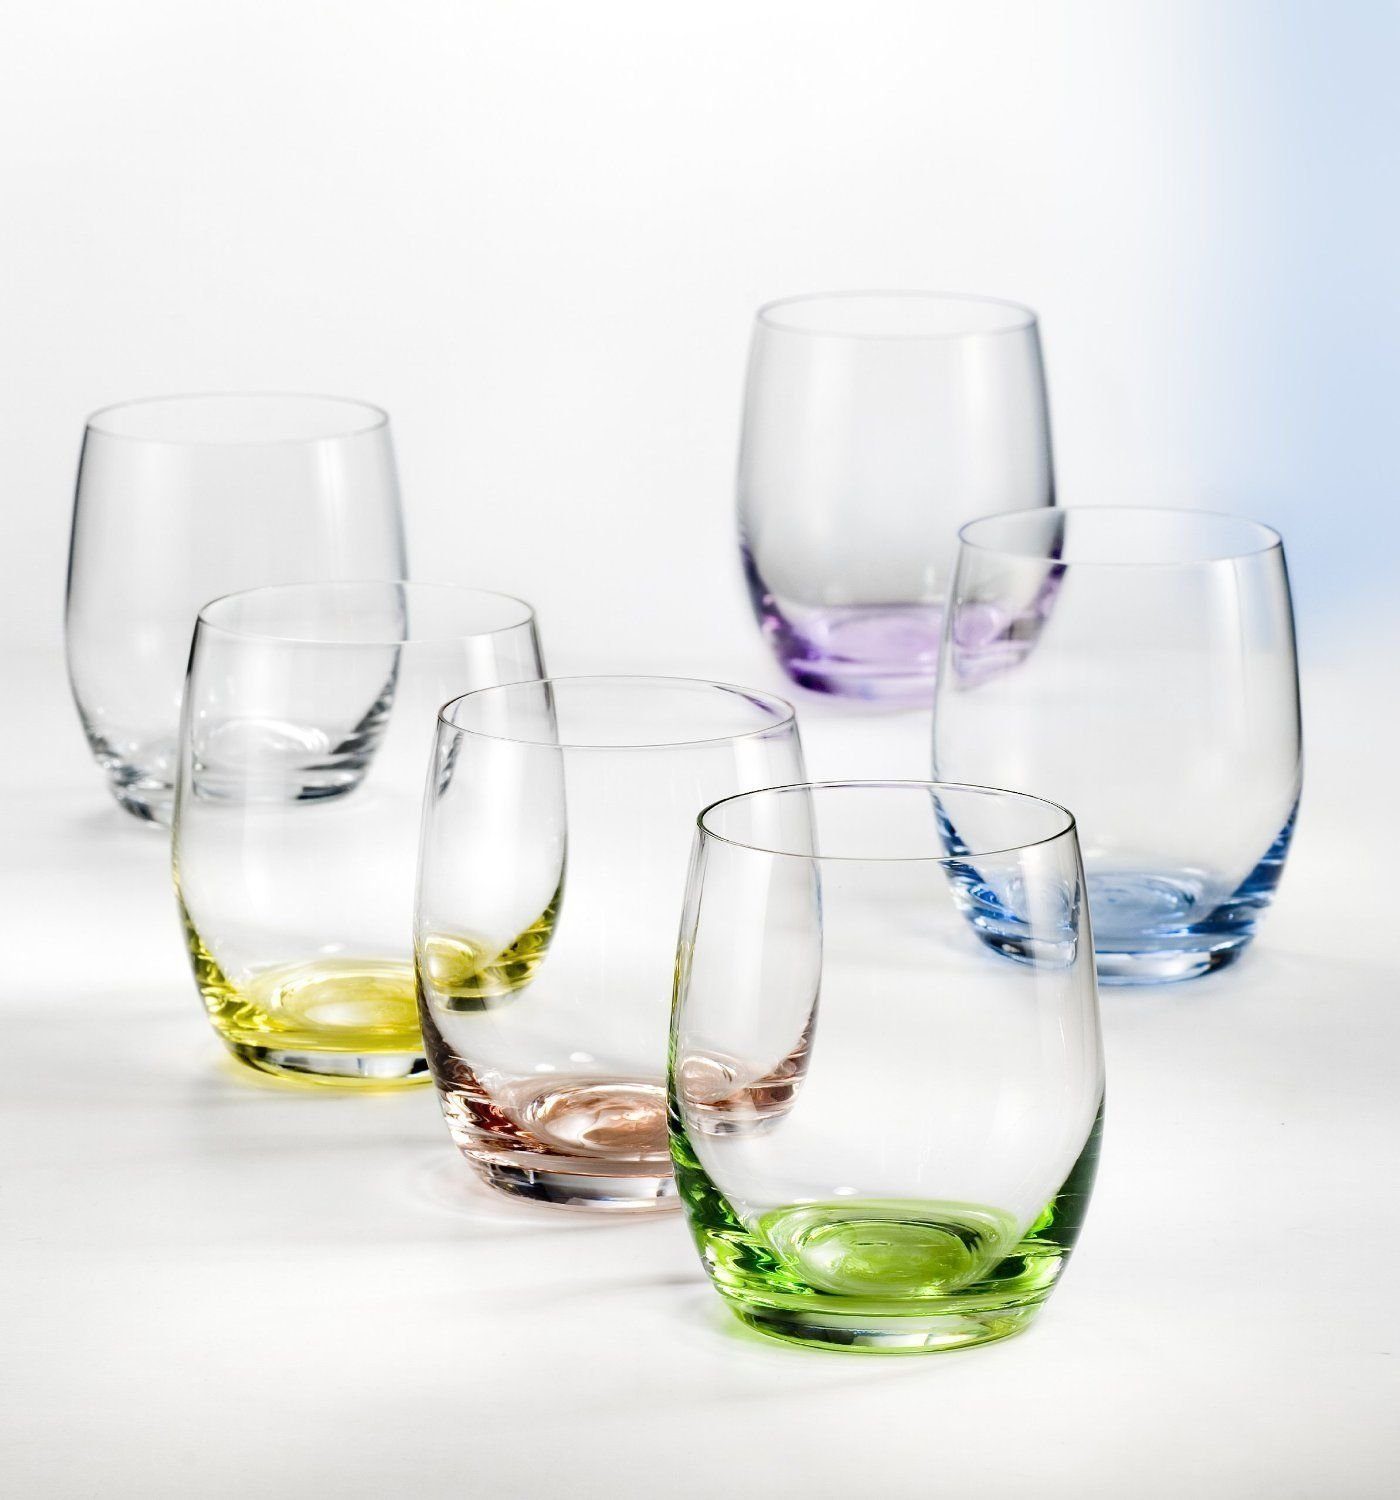 Crystalex Скло-Set Wassergläser Склянки для віскі Rainbow 300 ml mehrfarbig 6er Set, Kristallglas, Farbig: gelb, grün, blau, lila, grau, rot, Kristallglas